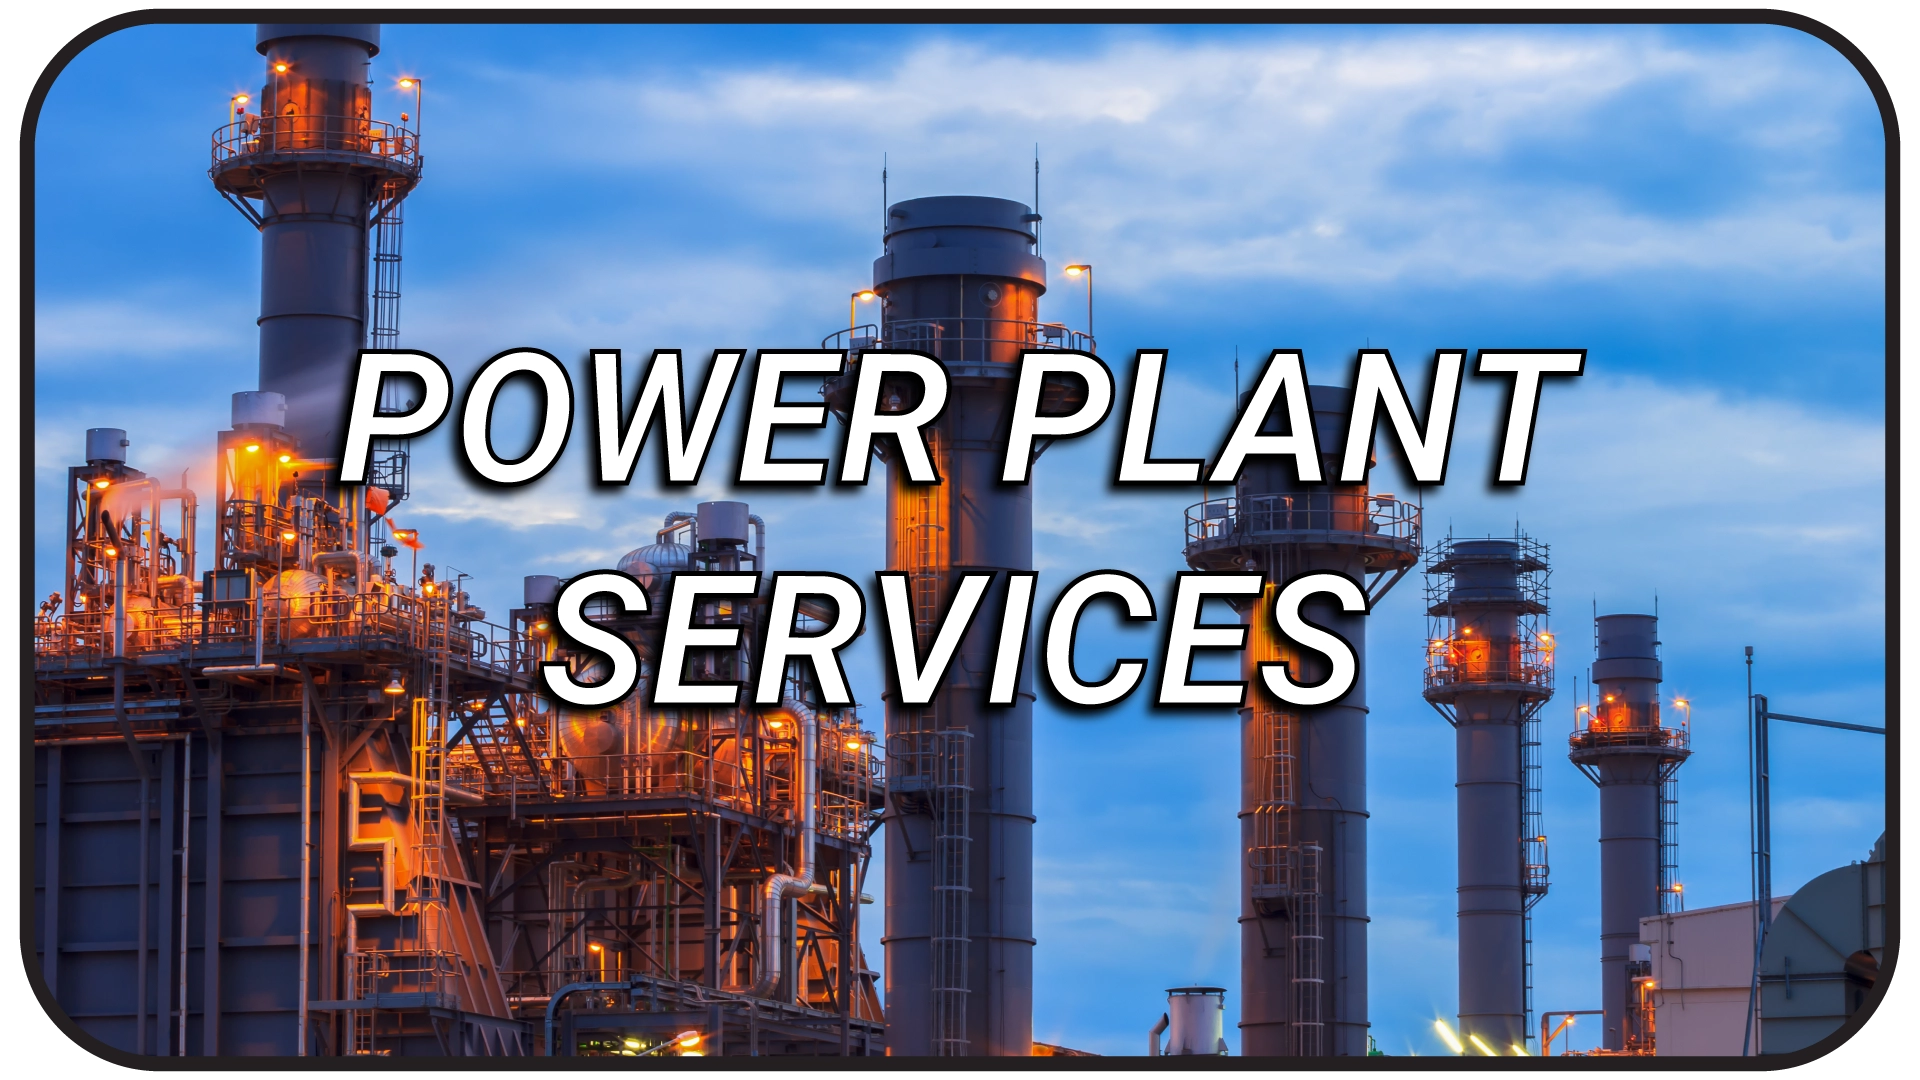 Power plant services